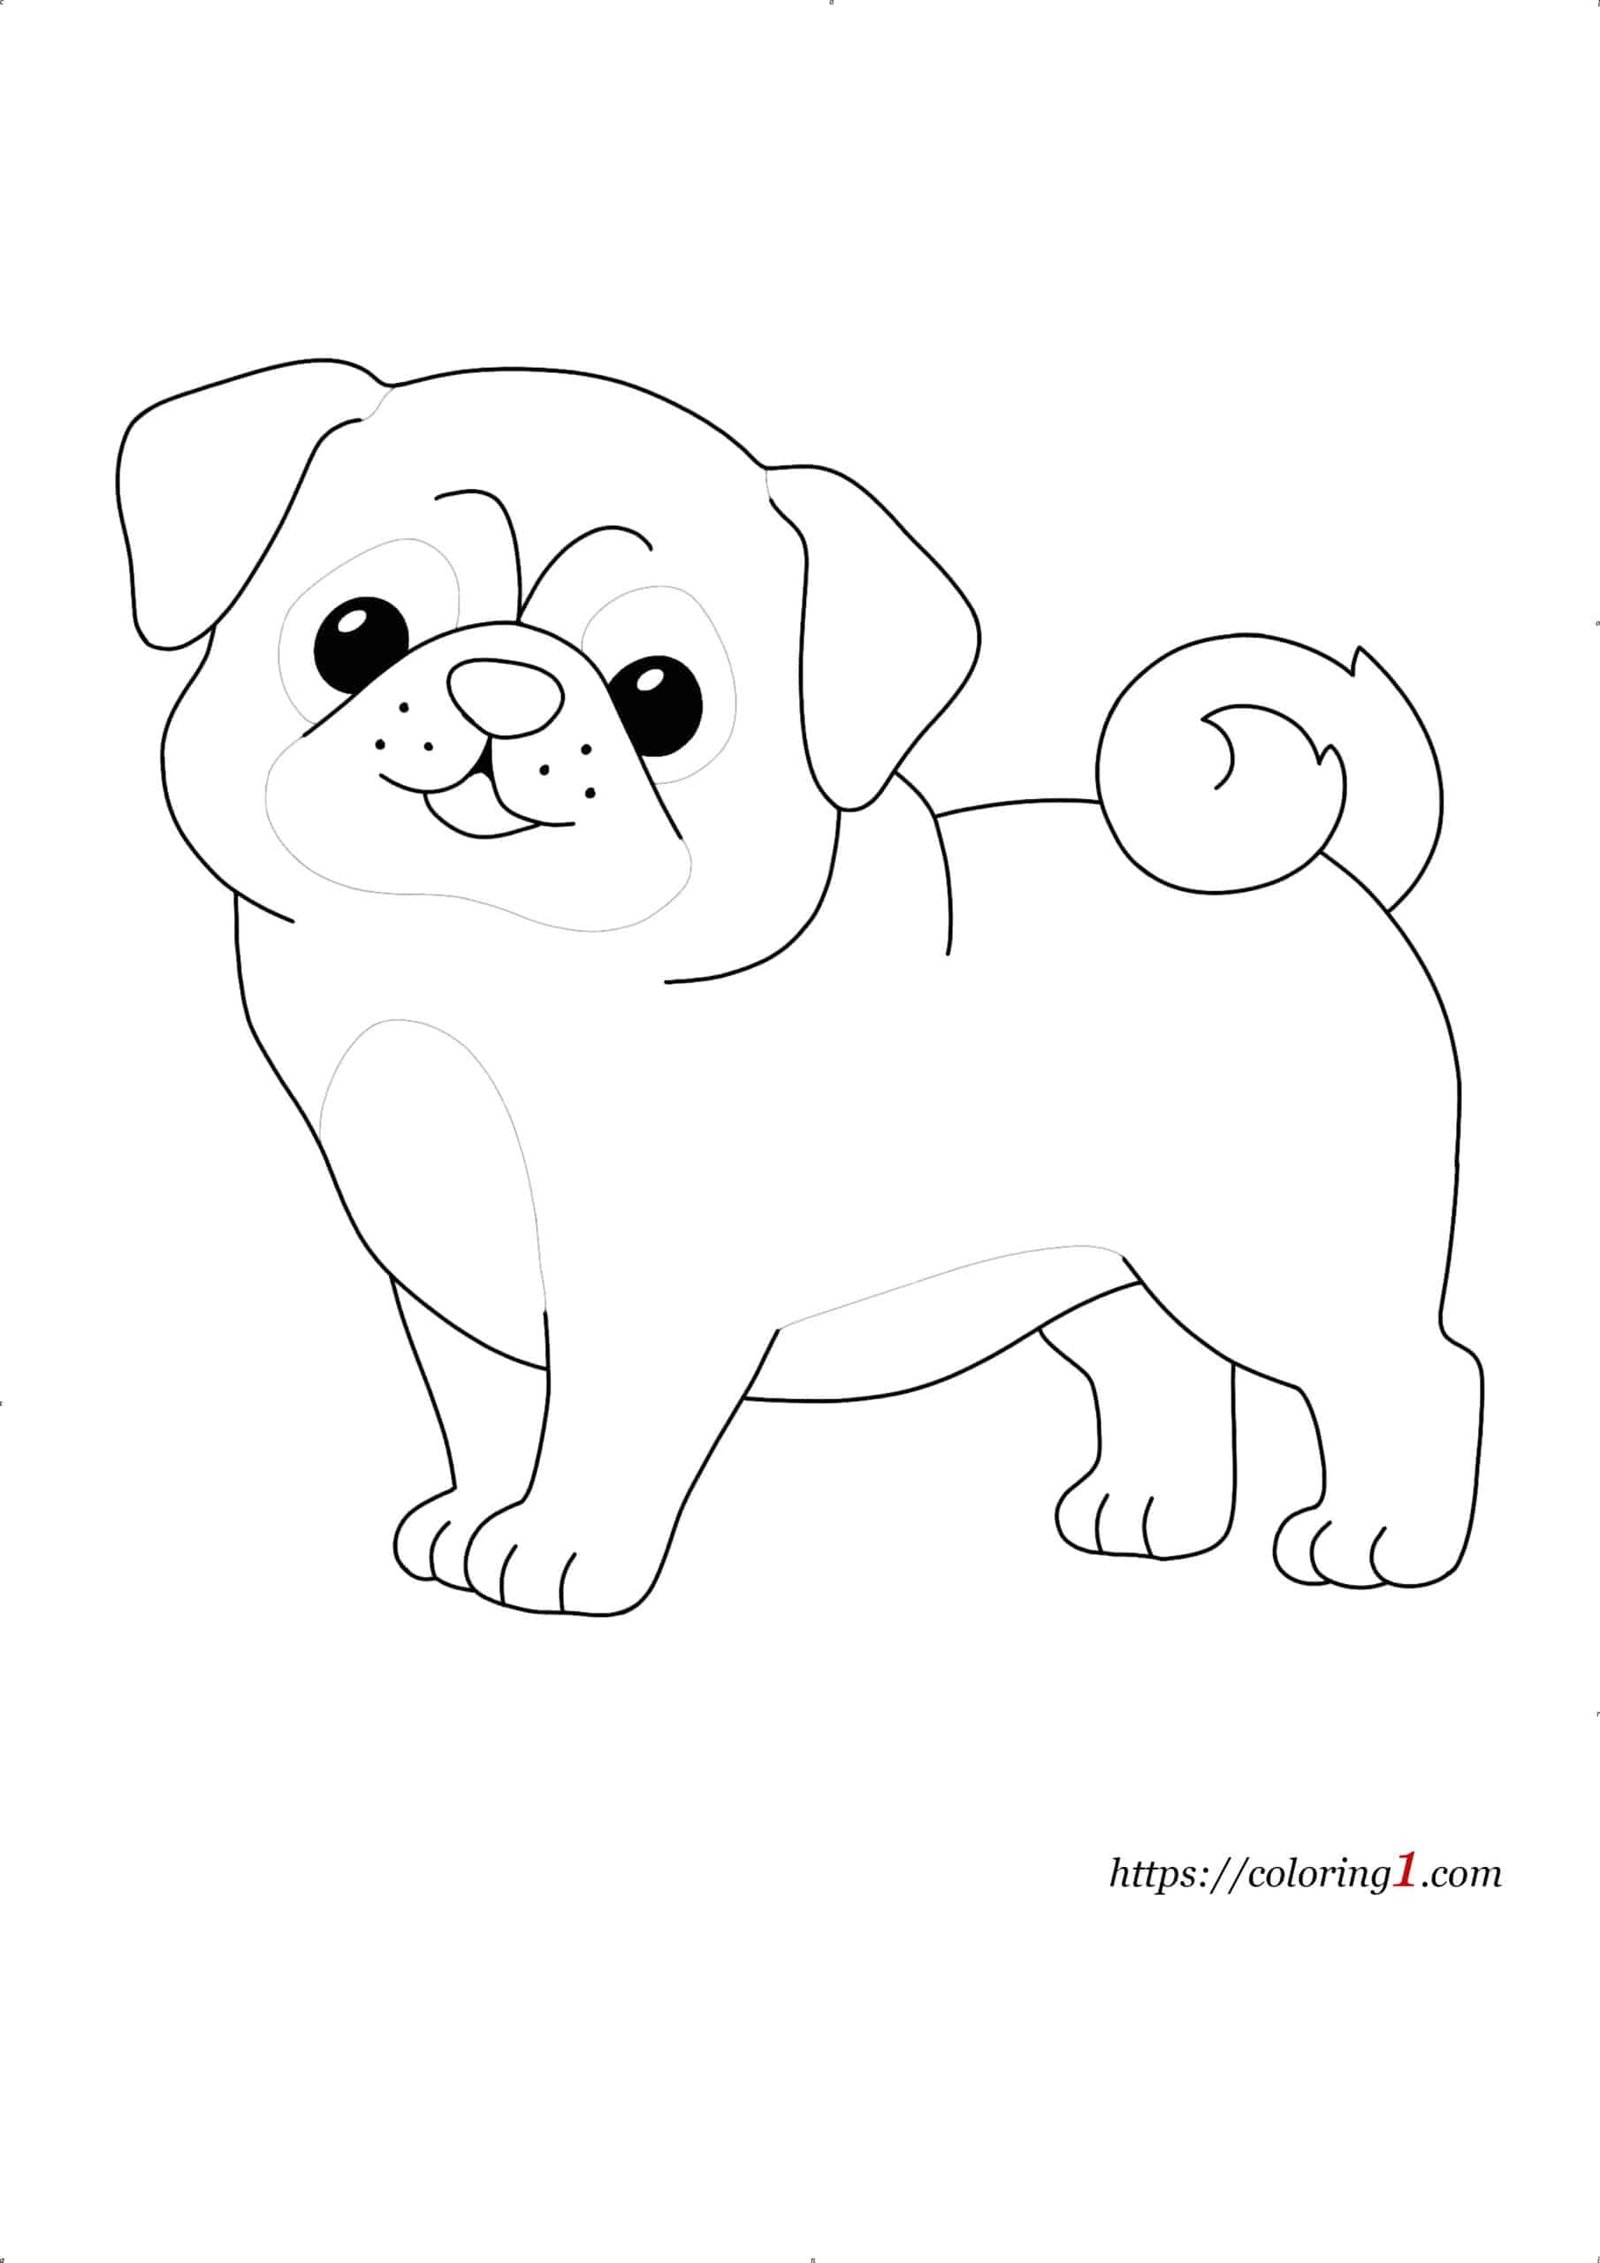 Pug Dog coloring page